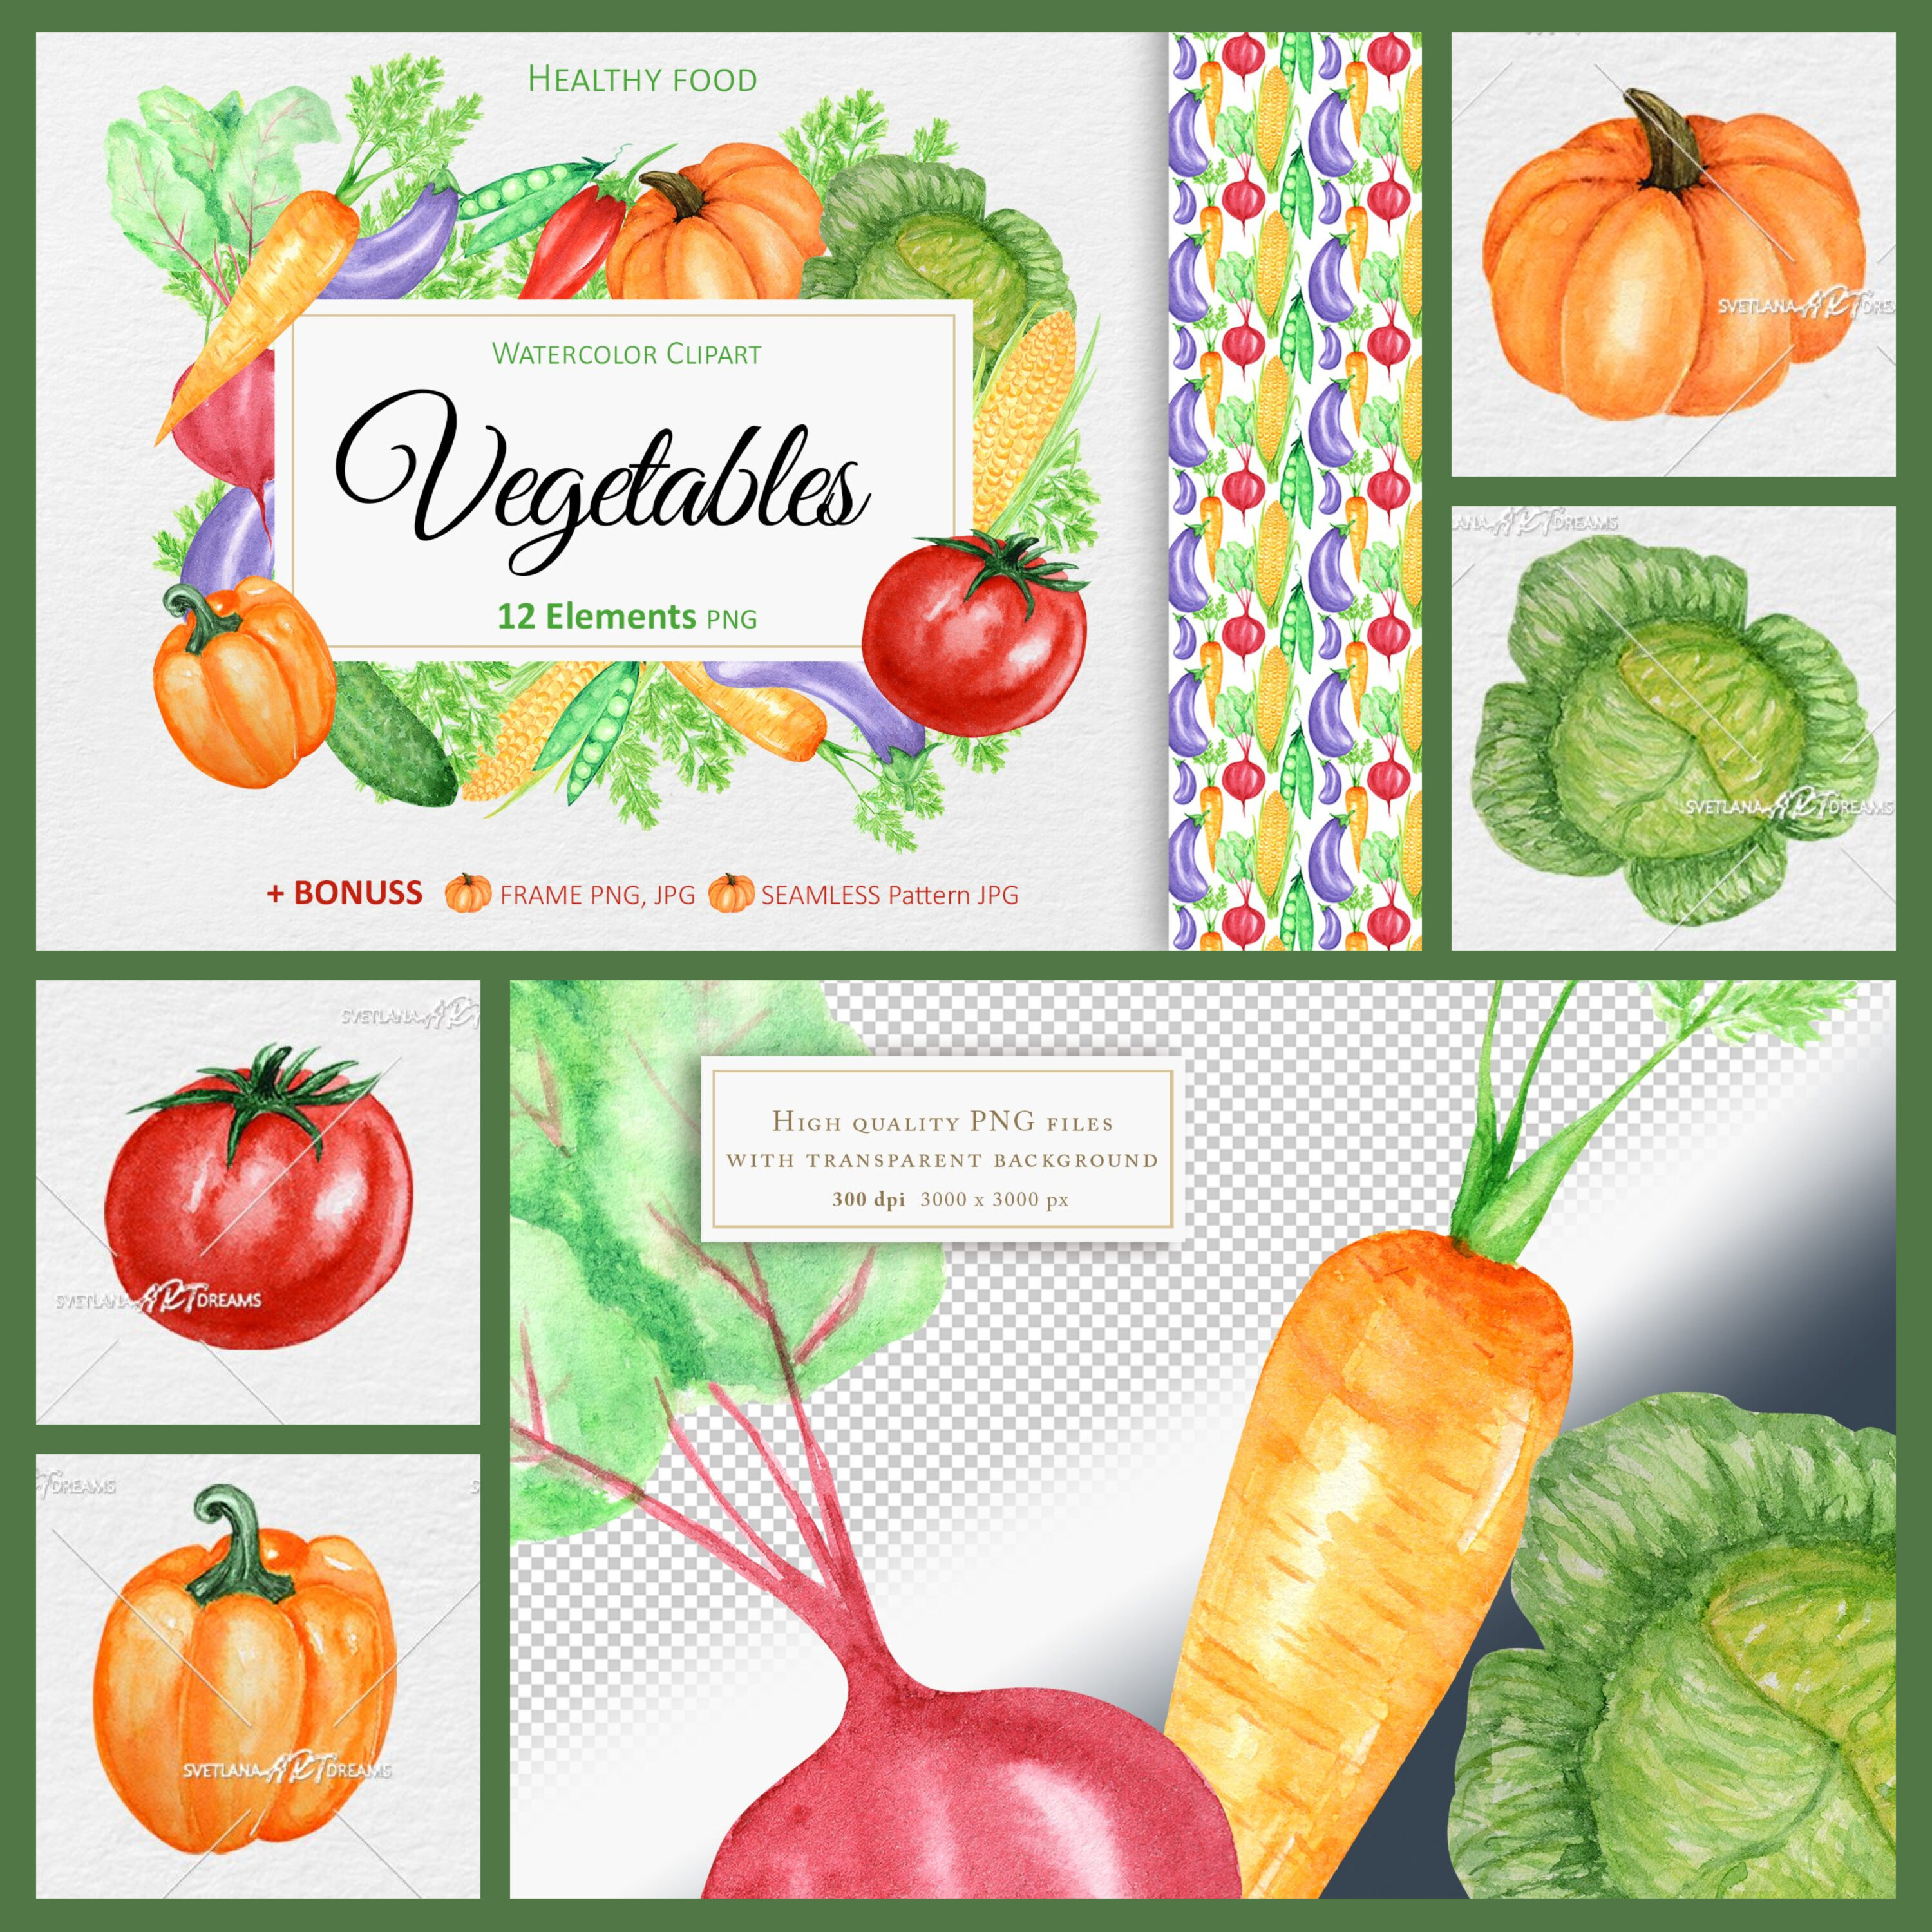 Preview vegetables watercolor clipart pattern healthy vegan food.